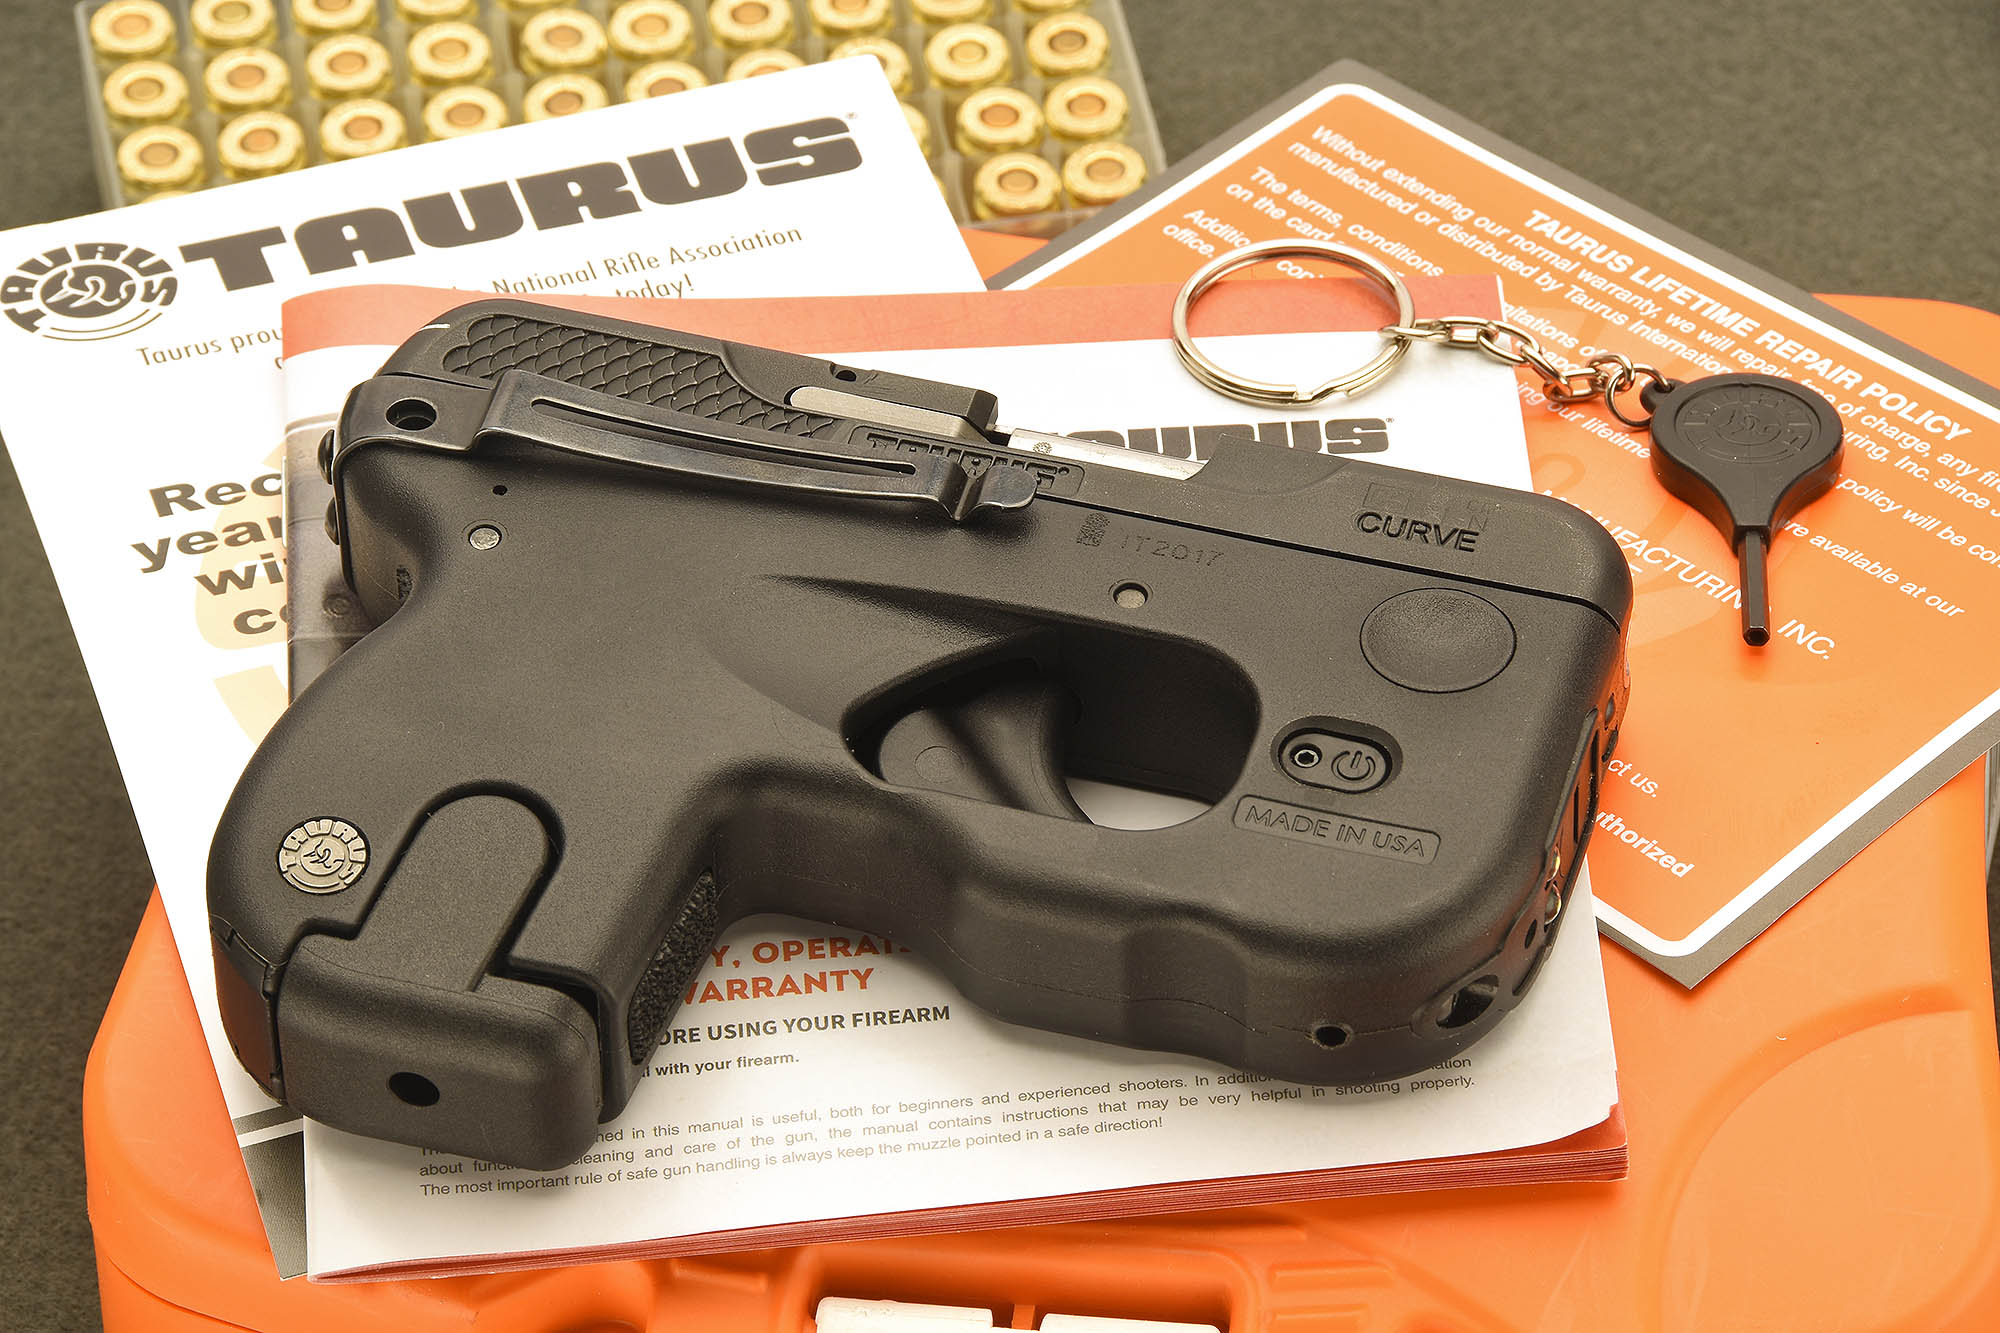 Taurus 180 Curve pocket pistol | GUNSweek.com